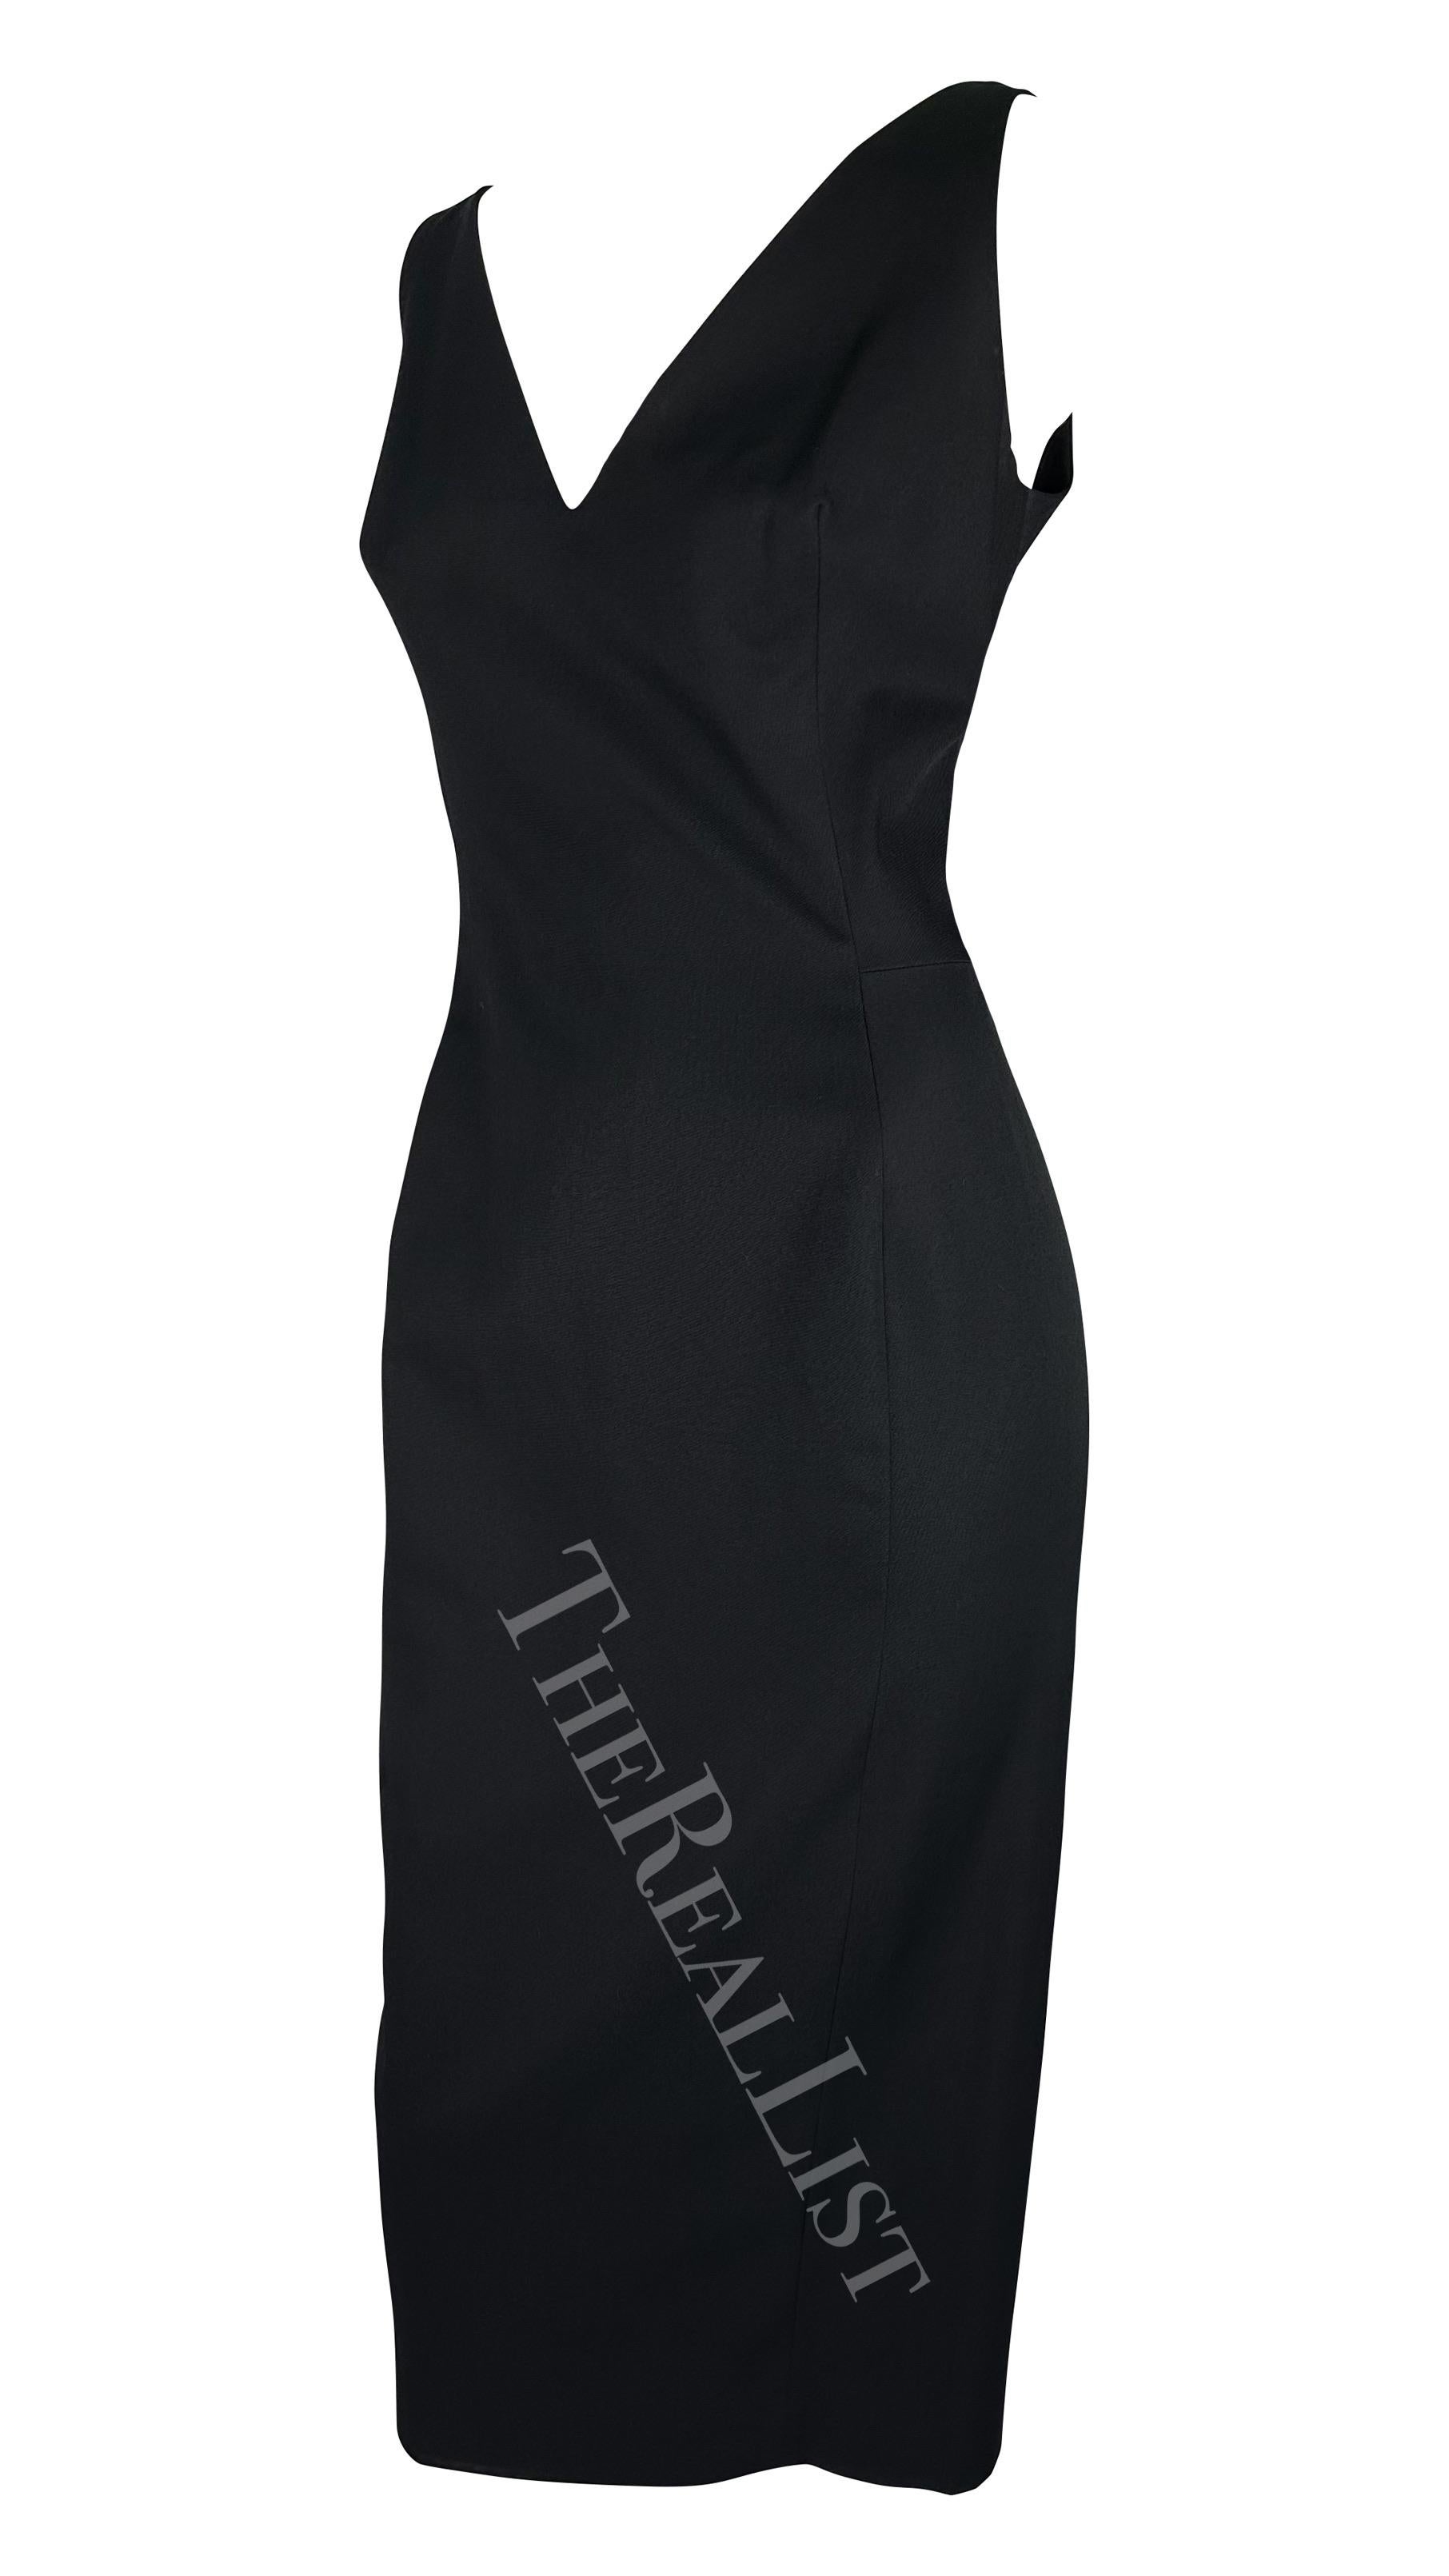 S/S 1995 John Galliano Runway Pin-Up Black Dress Houndstooth Blazer Set For Sale 10